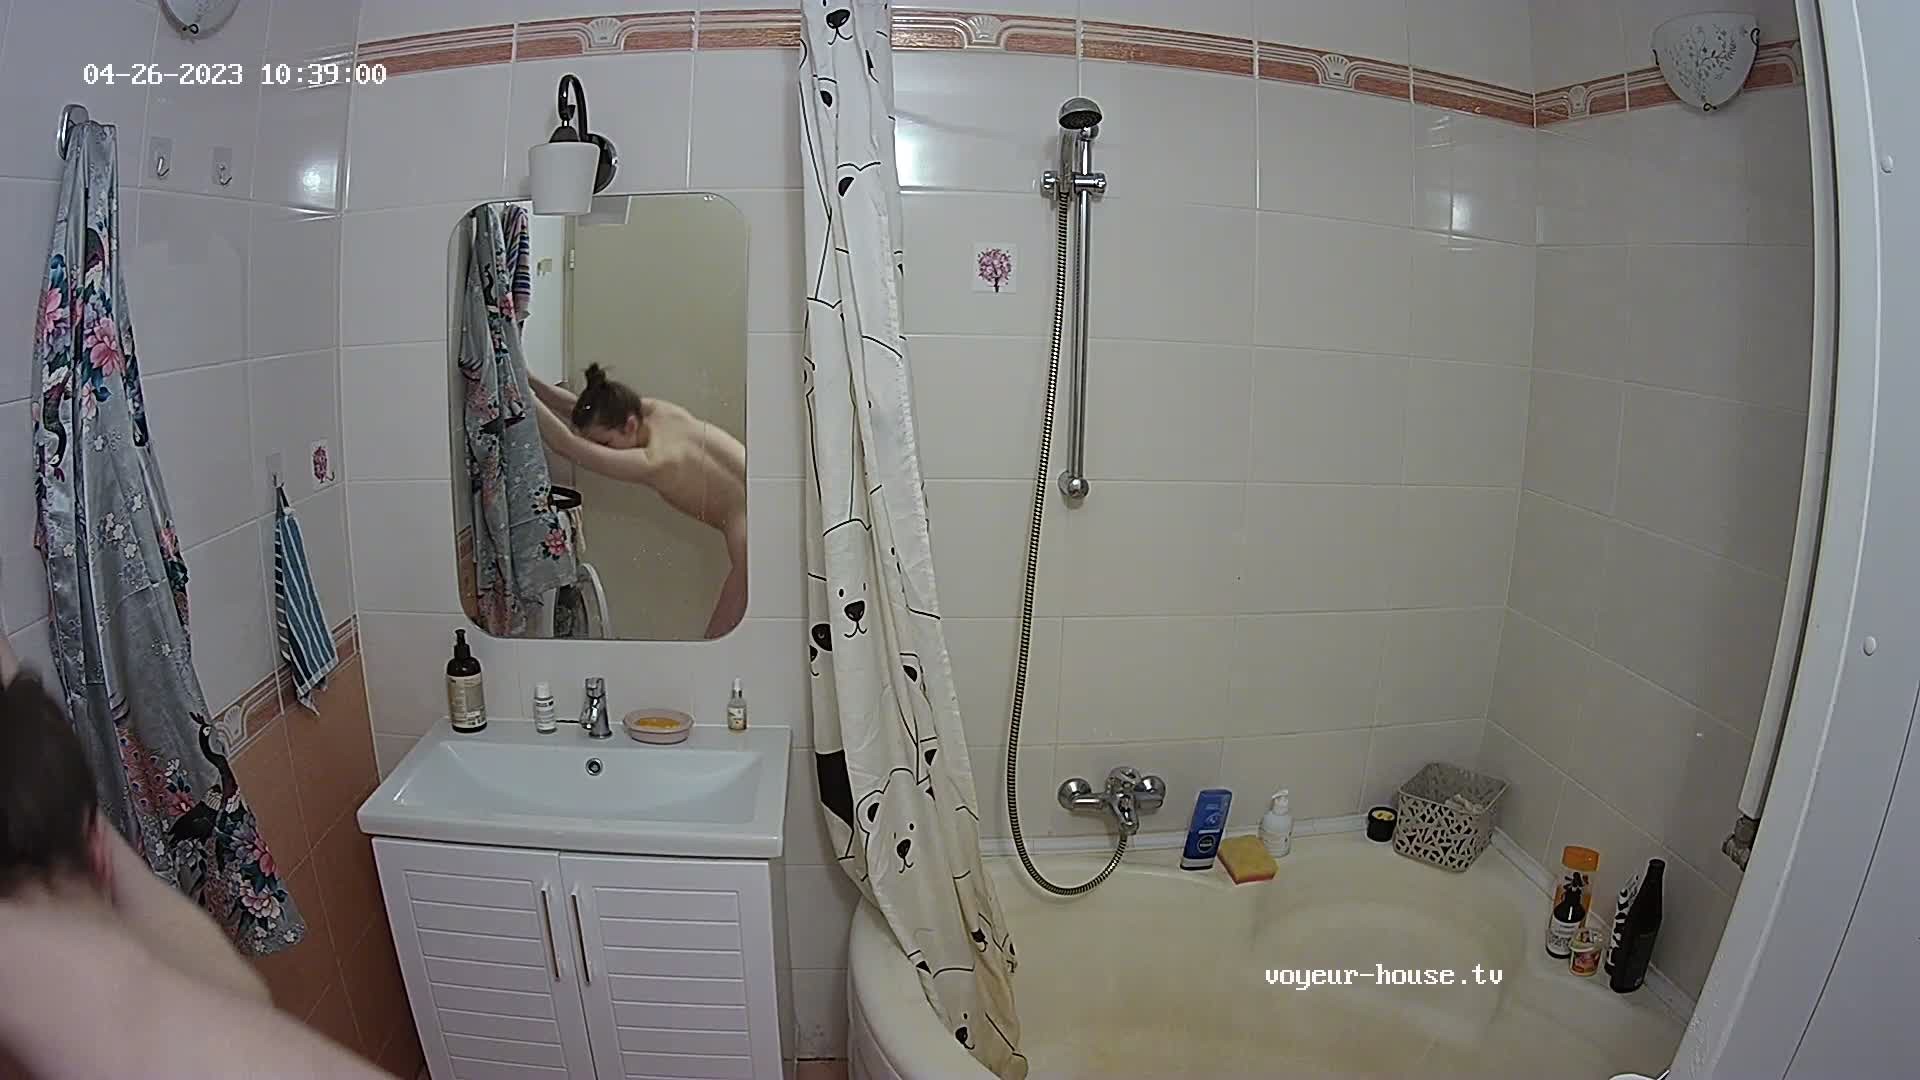 Eleanor Washing and Stretching In Bathroom Apr 26